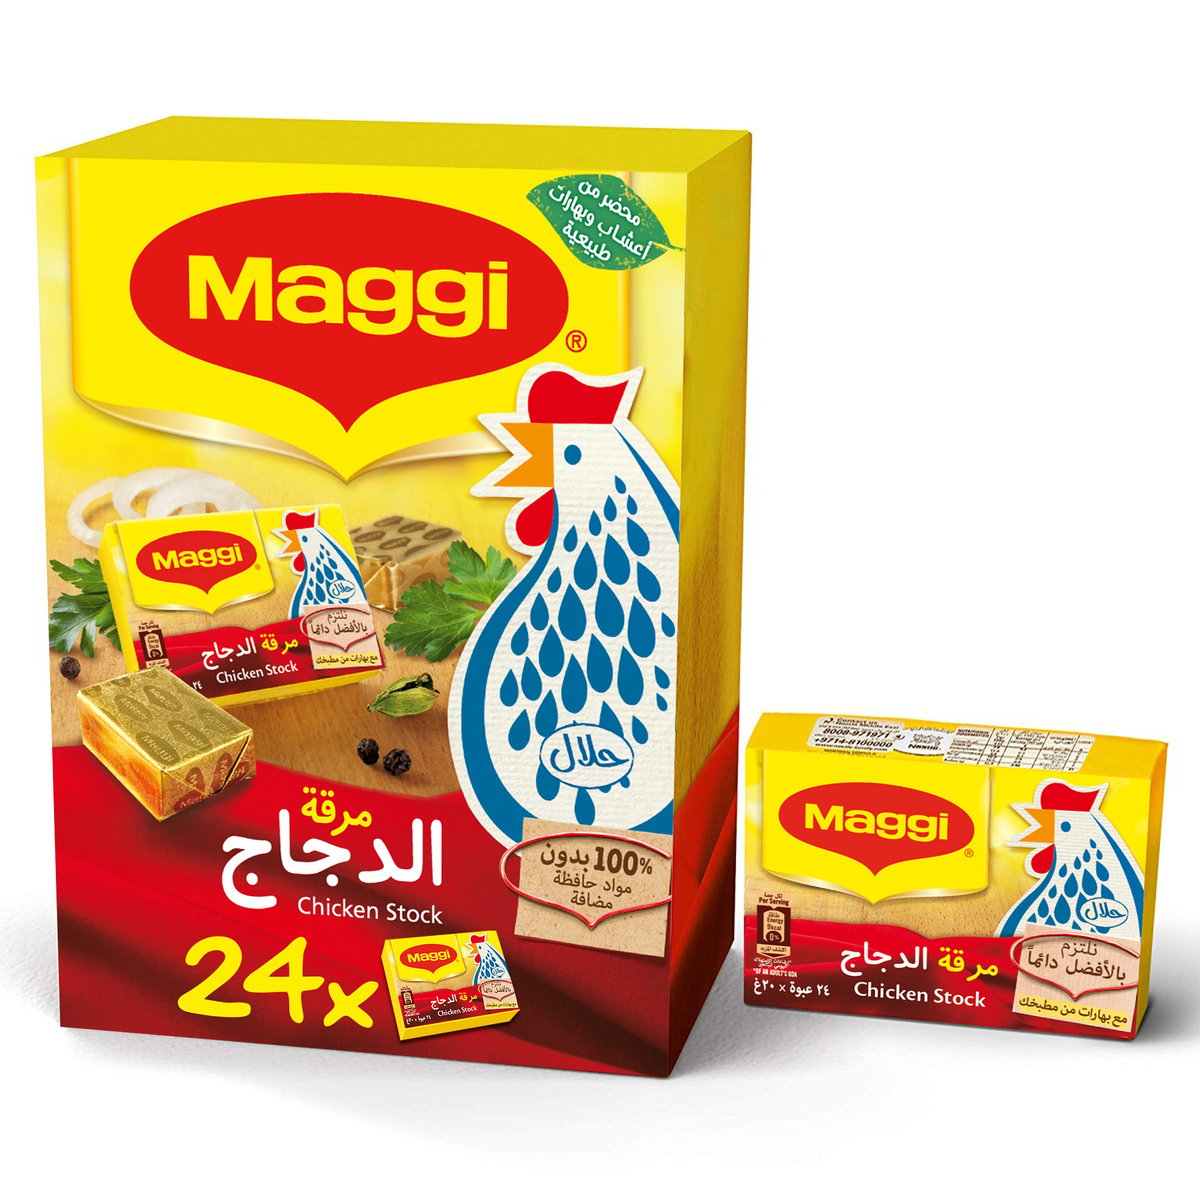 Maggi Chicken Stock 28 x 20g